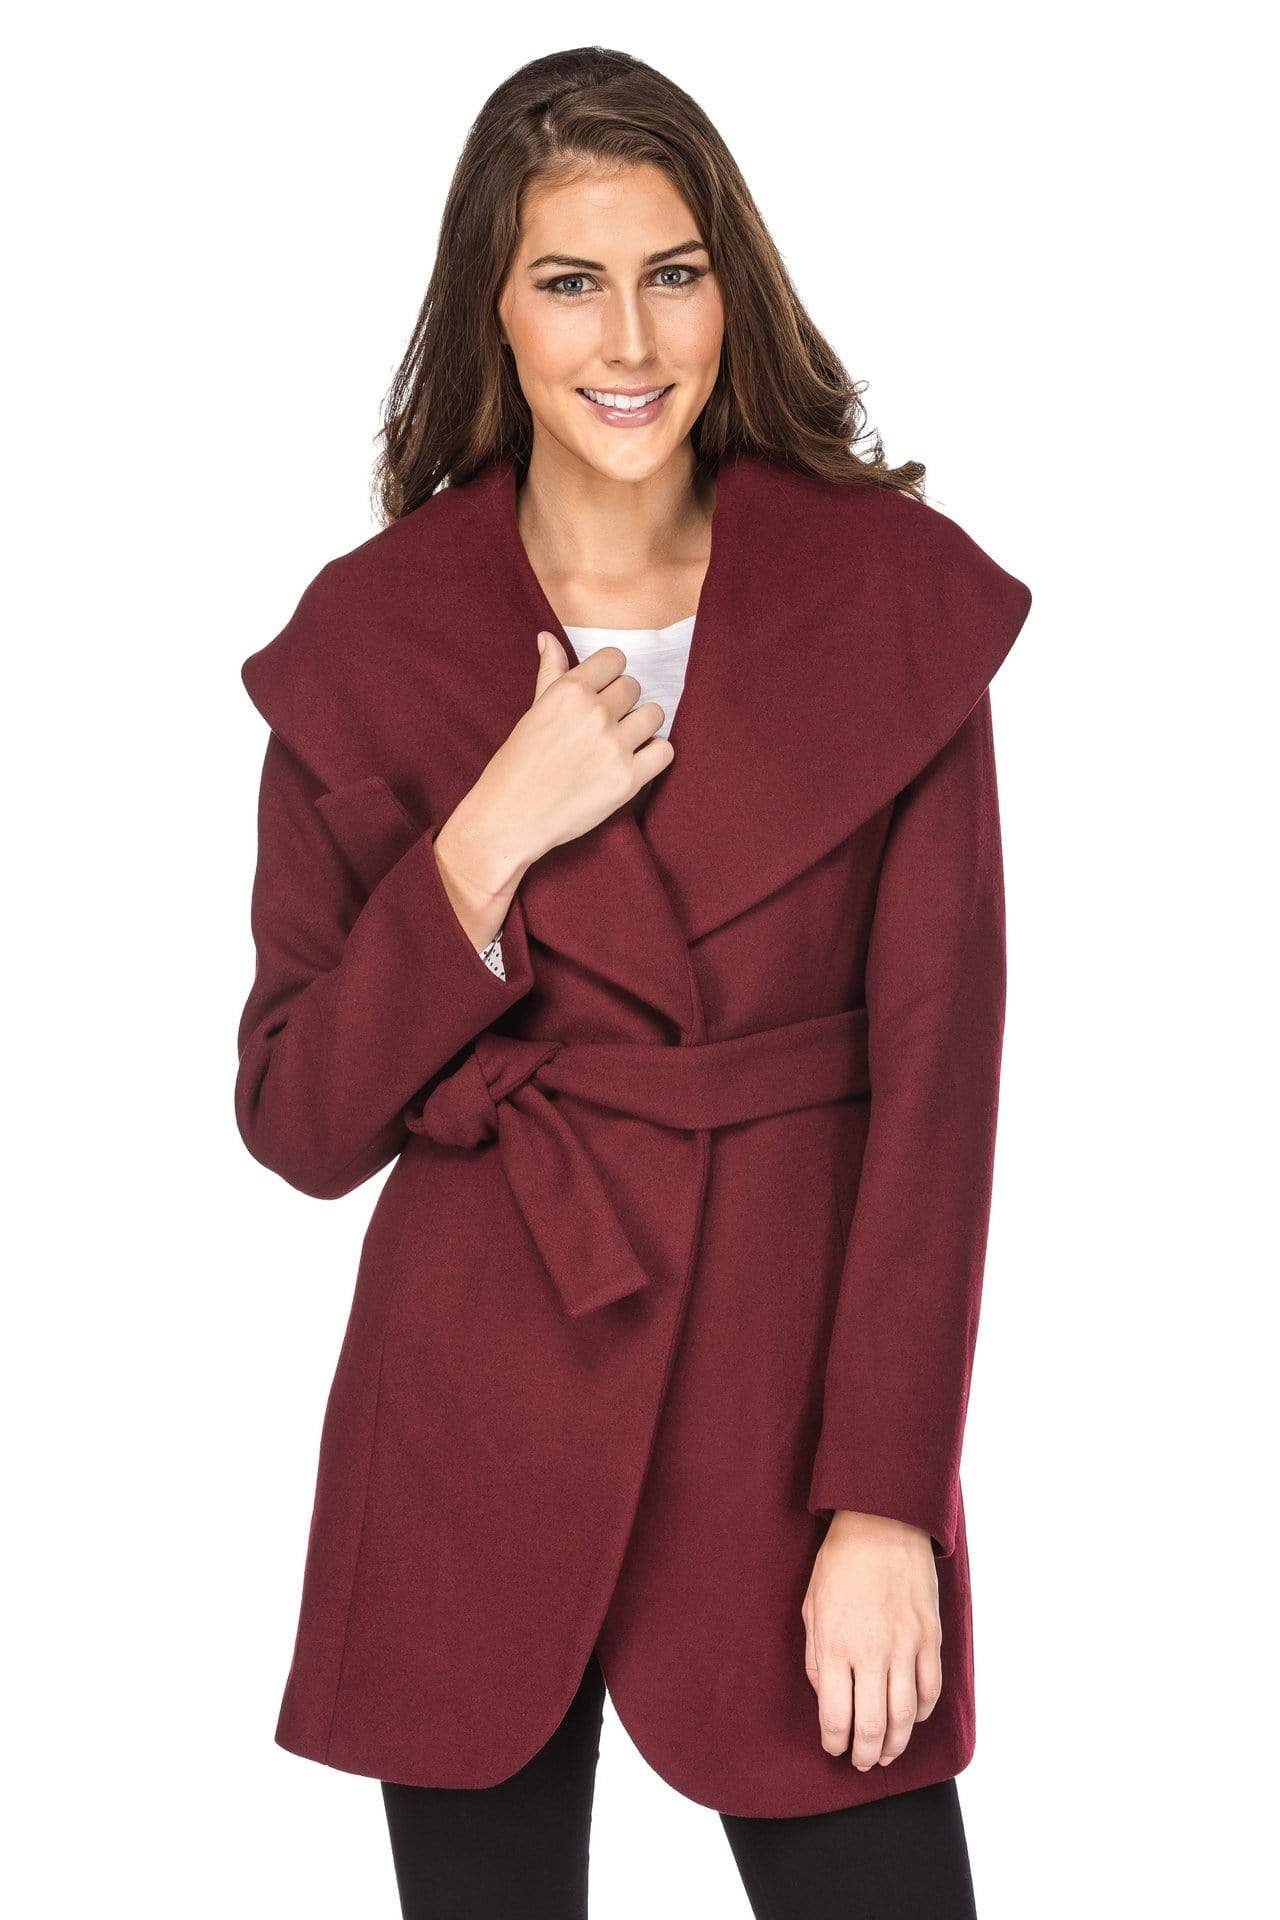 Haute Edition Women's Wool Blend Shawl Collar Wrap Coat